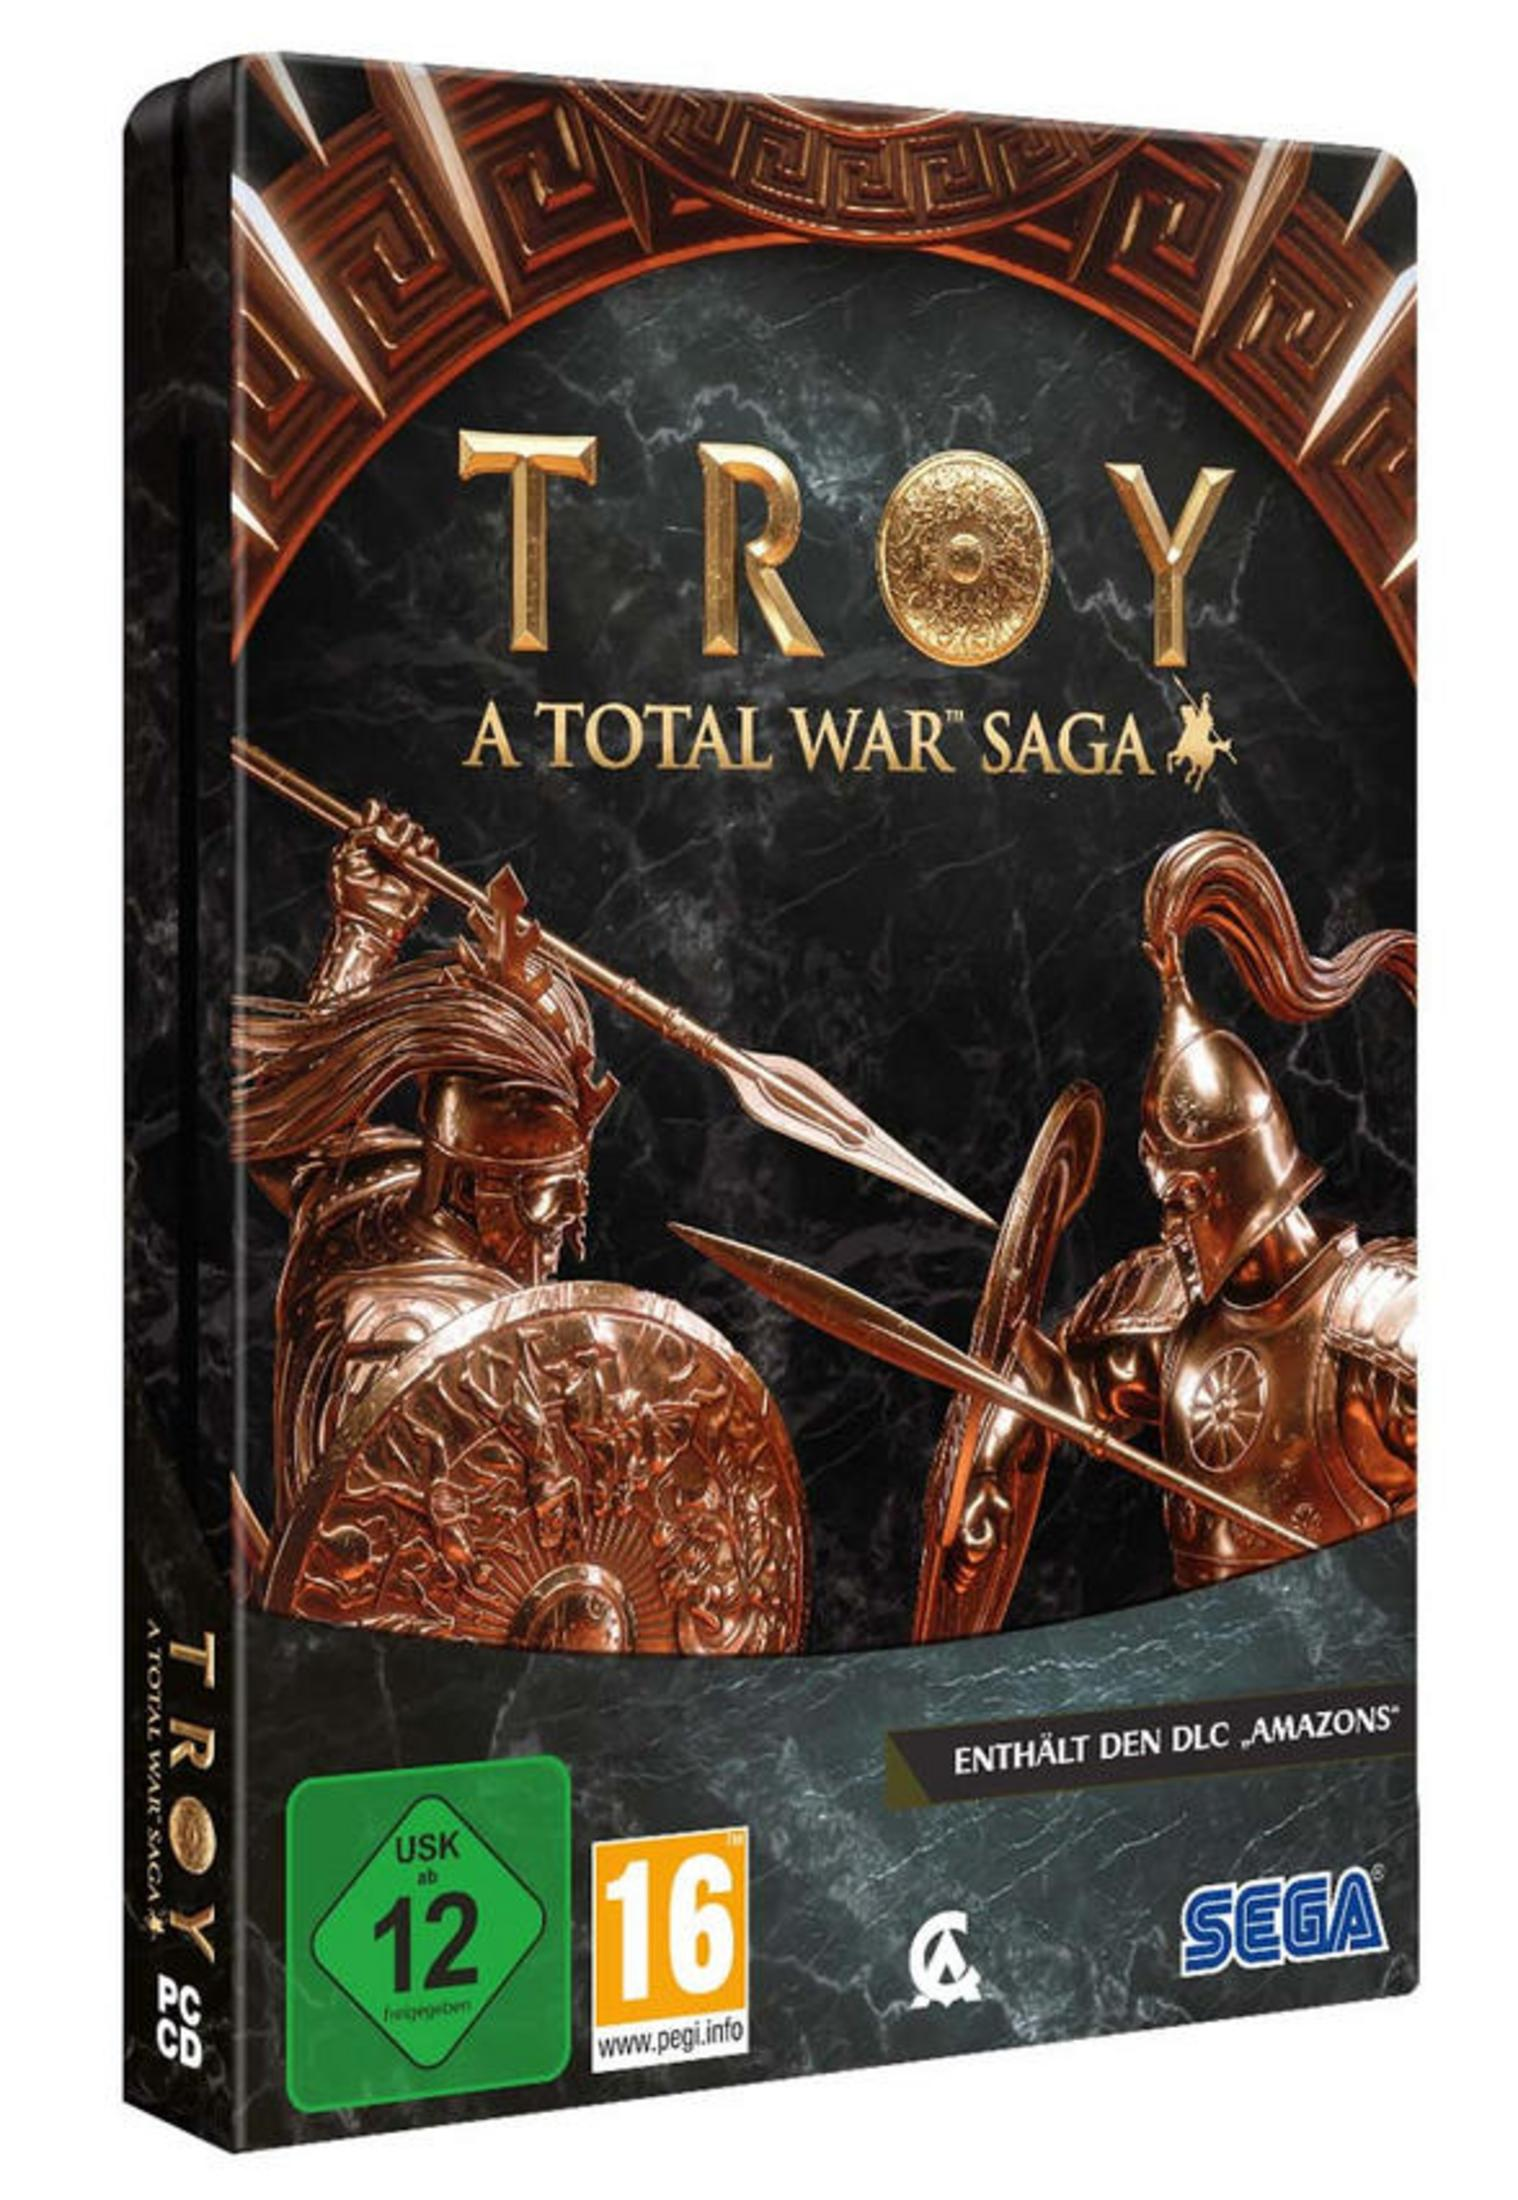 Limited [PC] Saga: Total Edition - Troy A War